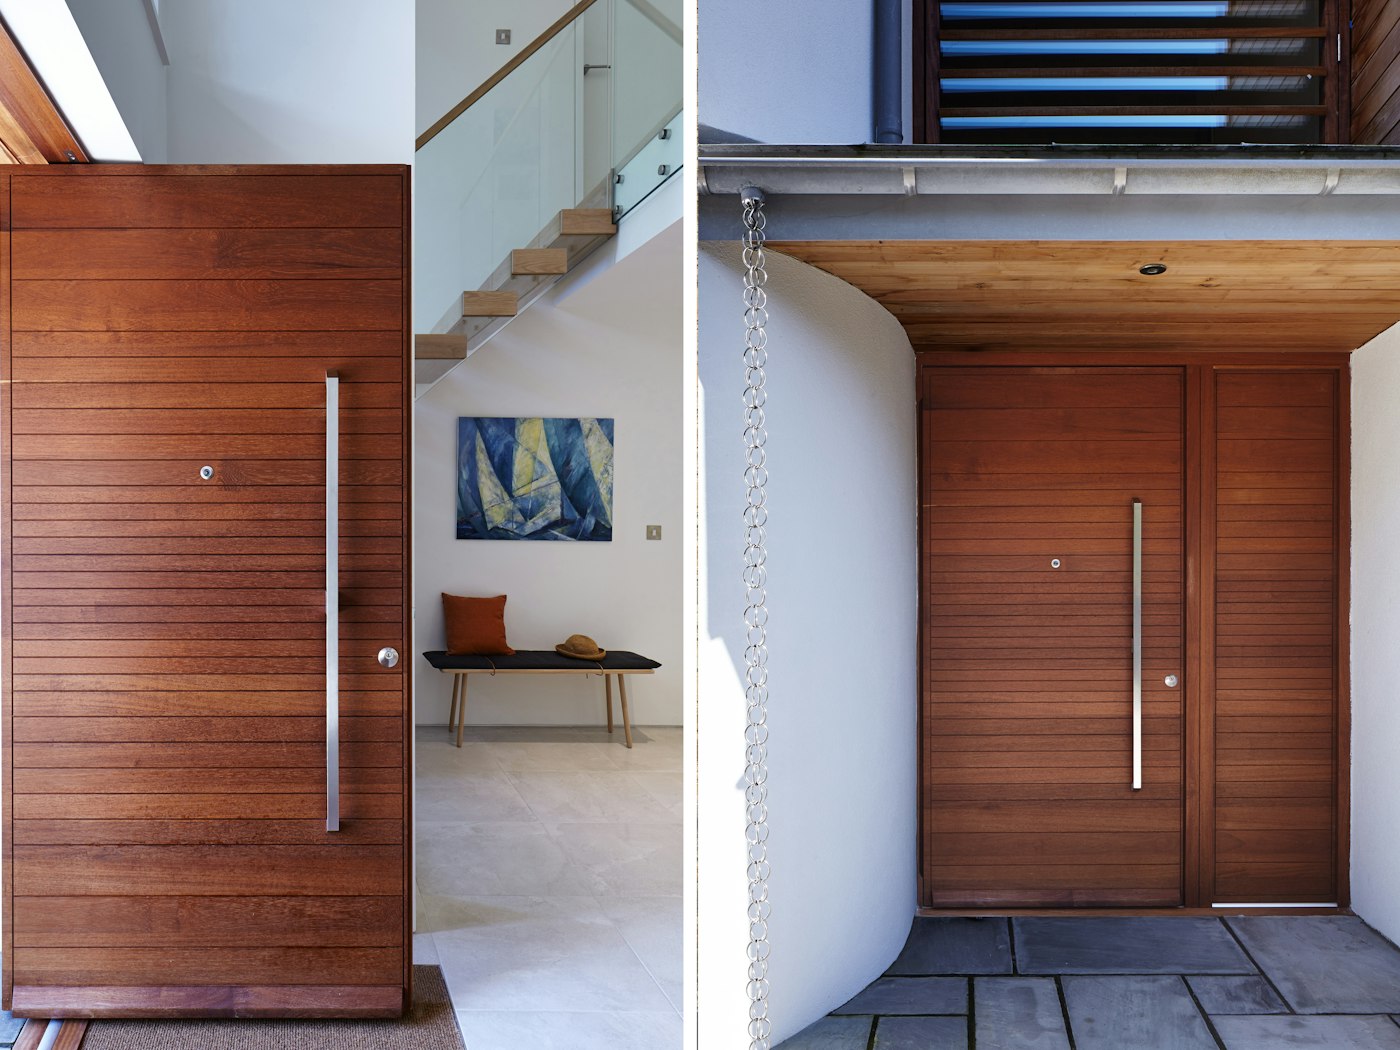 Internal & external views of this iroko wood door